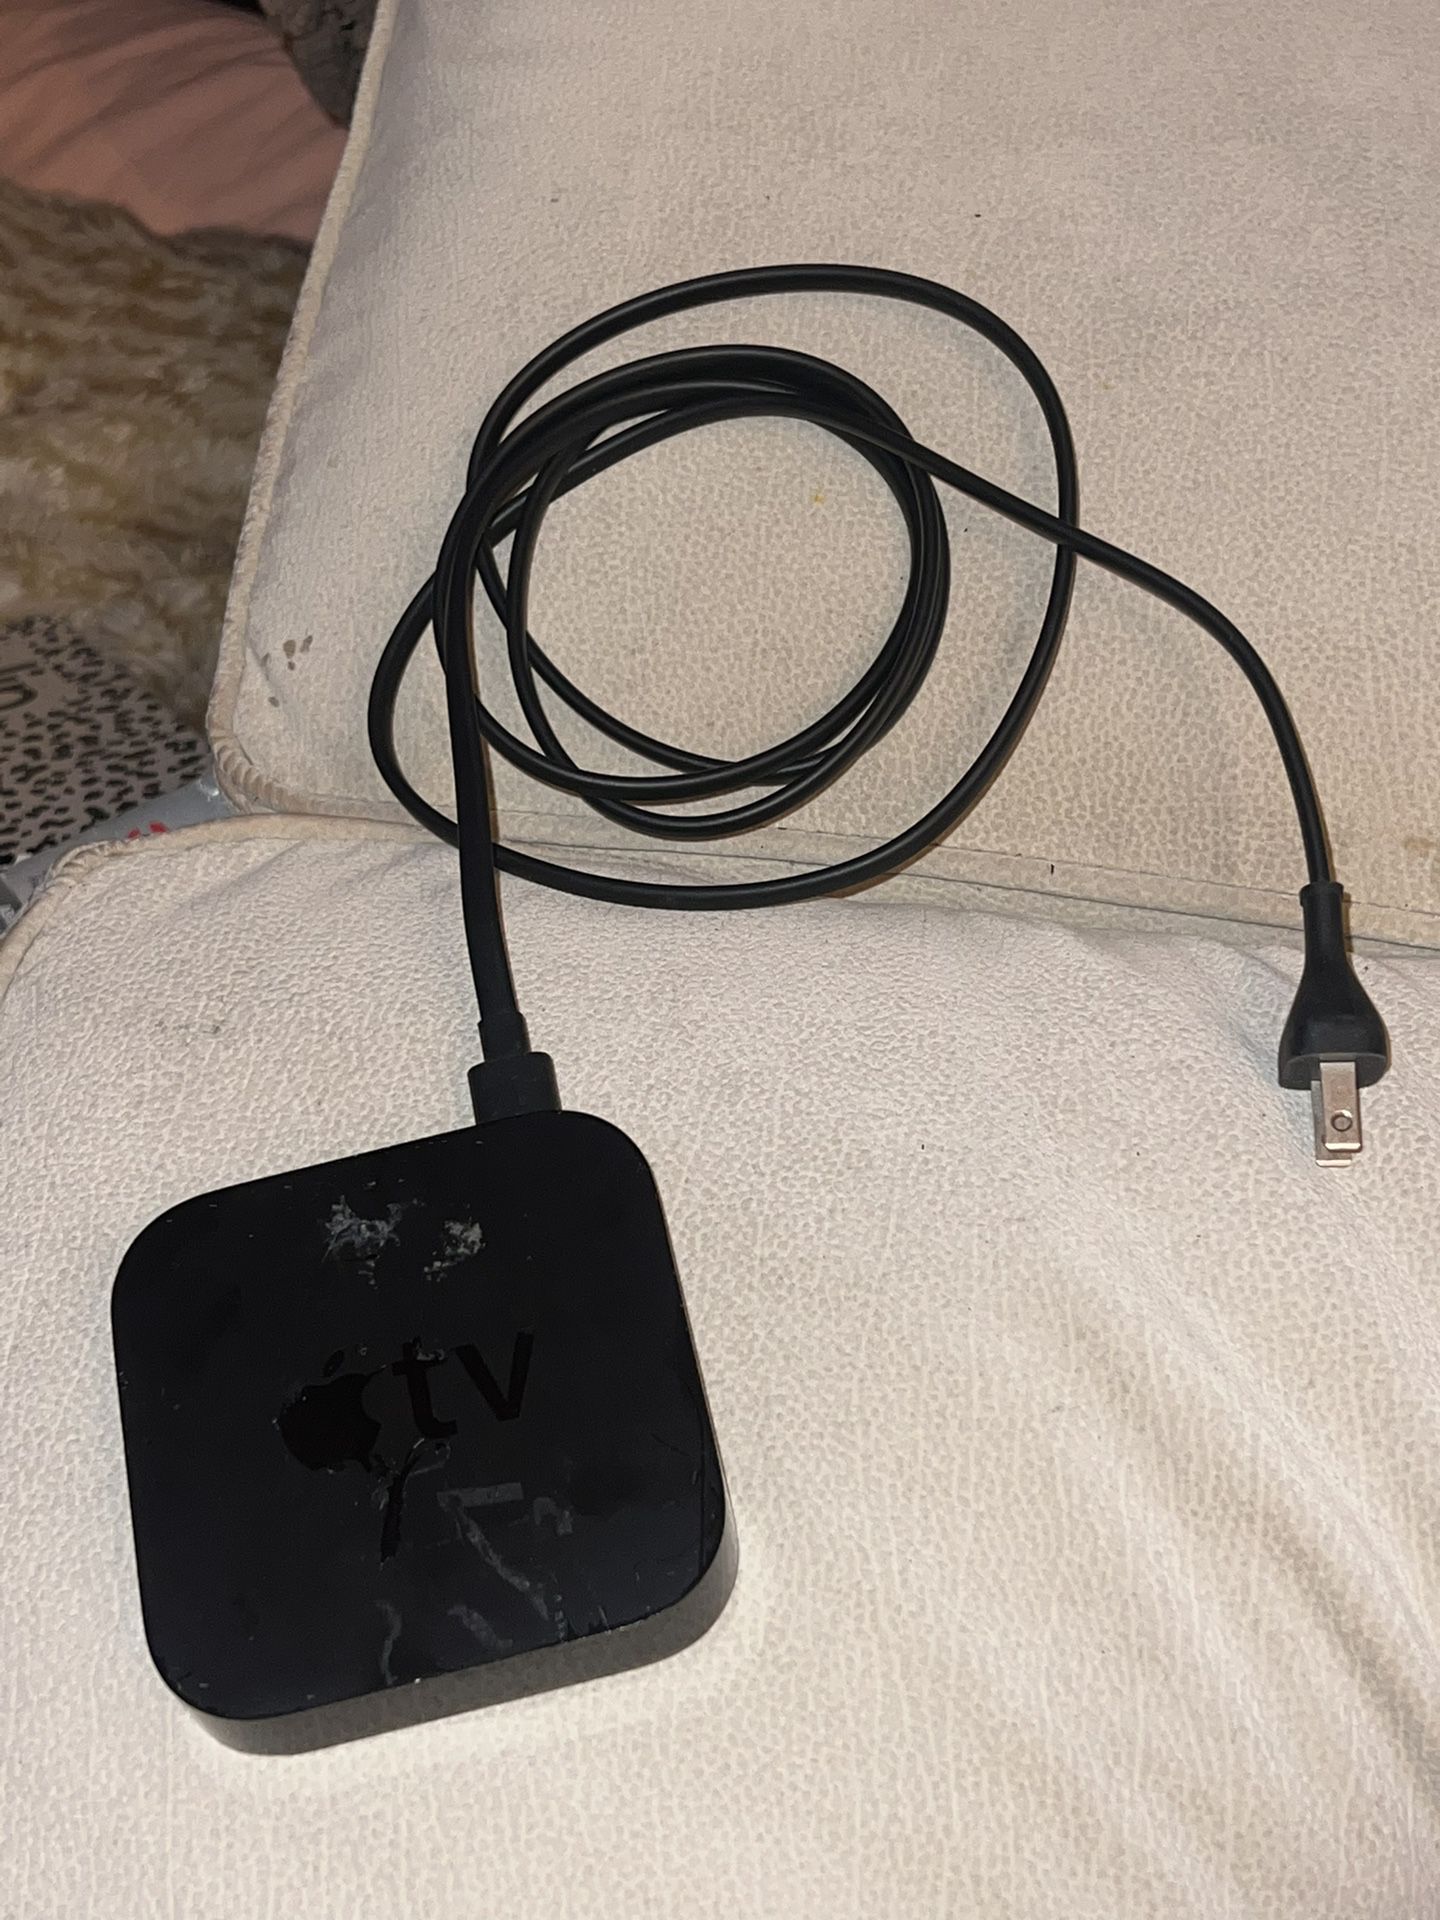 USED Apple TV 2nd Generation